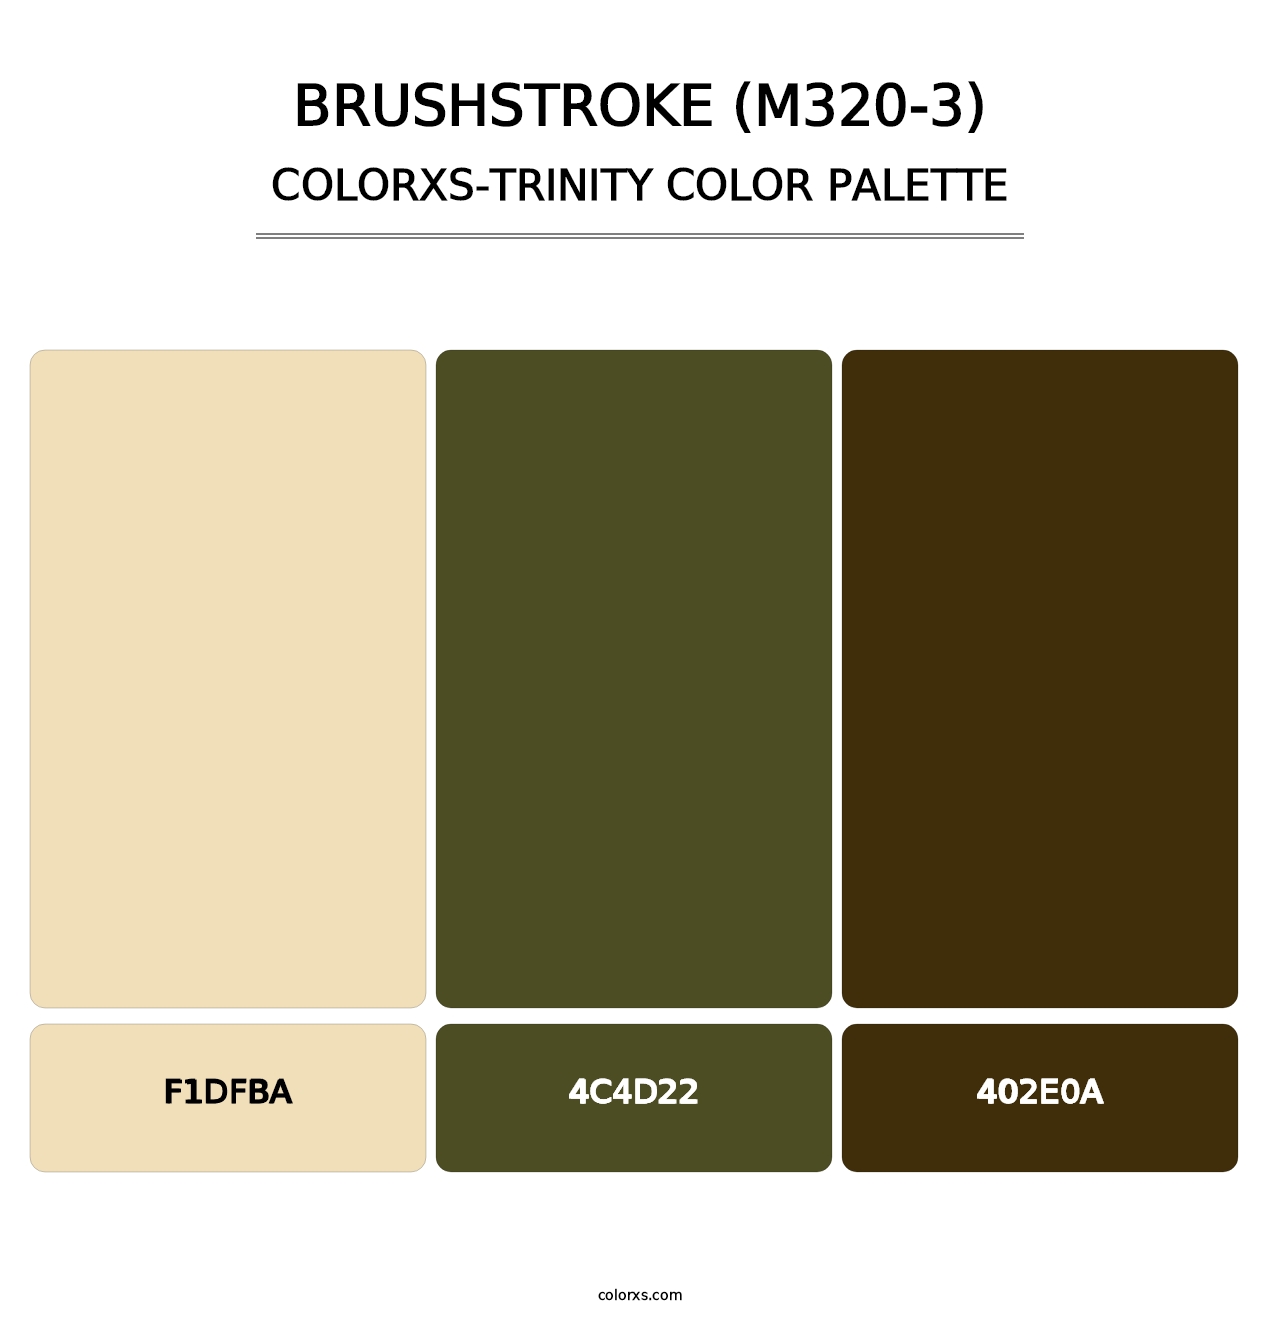 Brushstroke (M320-3) - Colorxs Trinity Palette